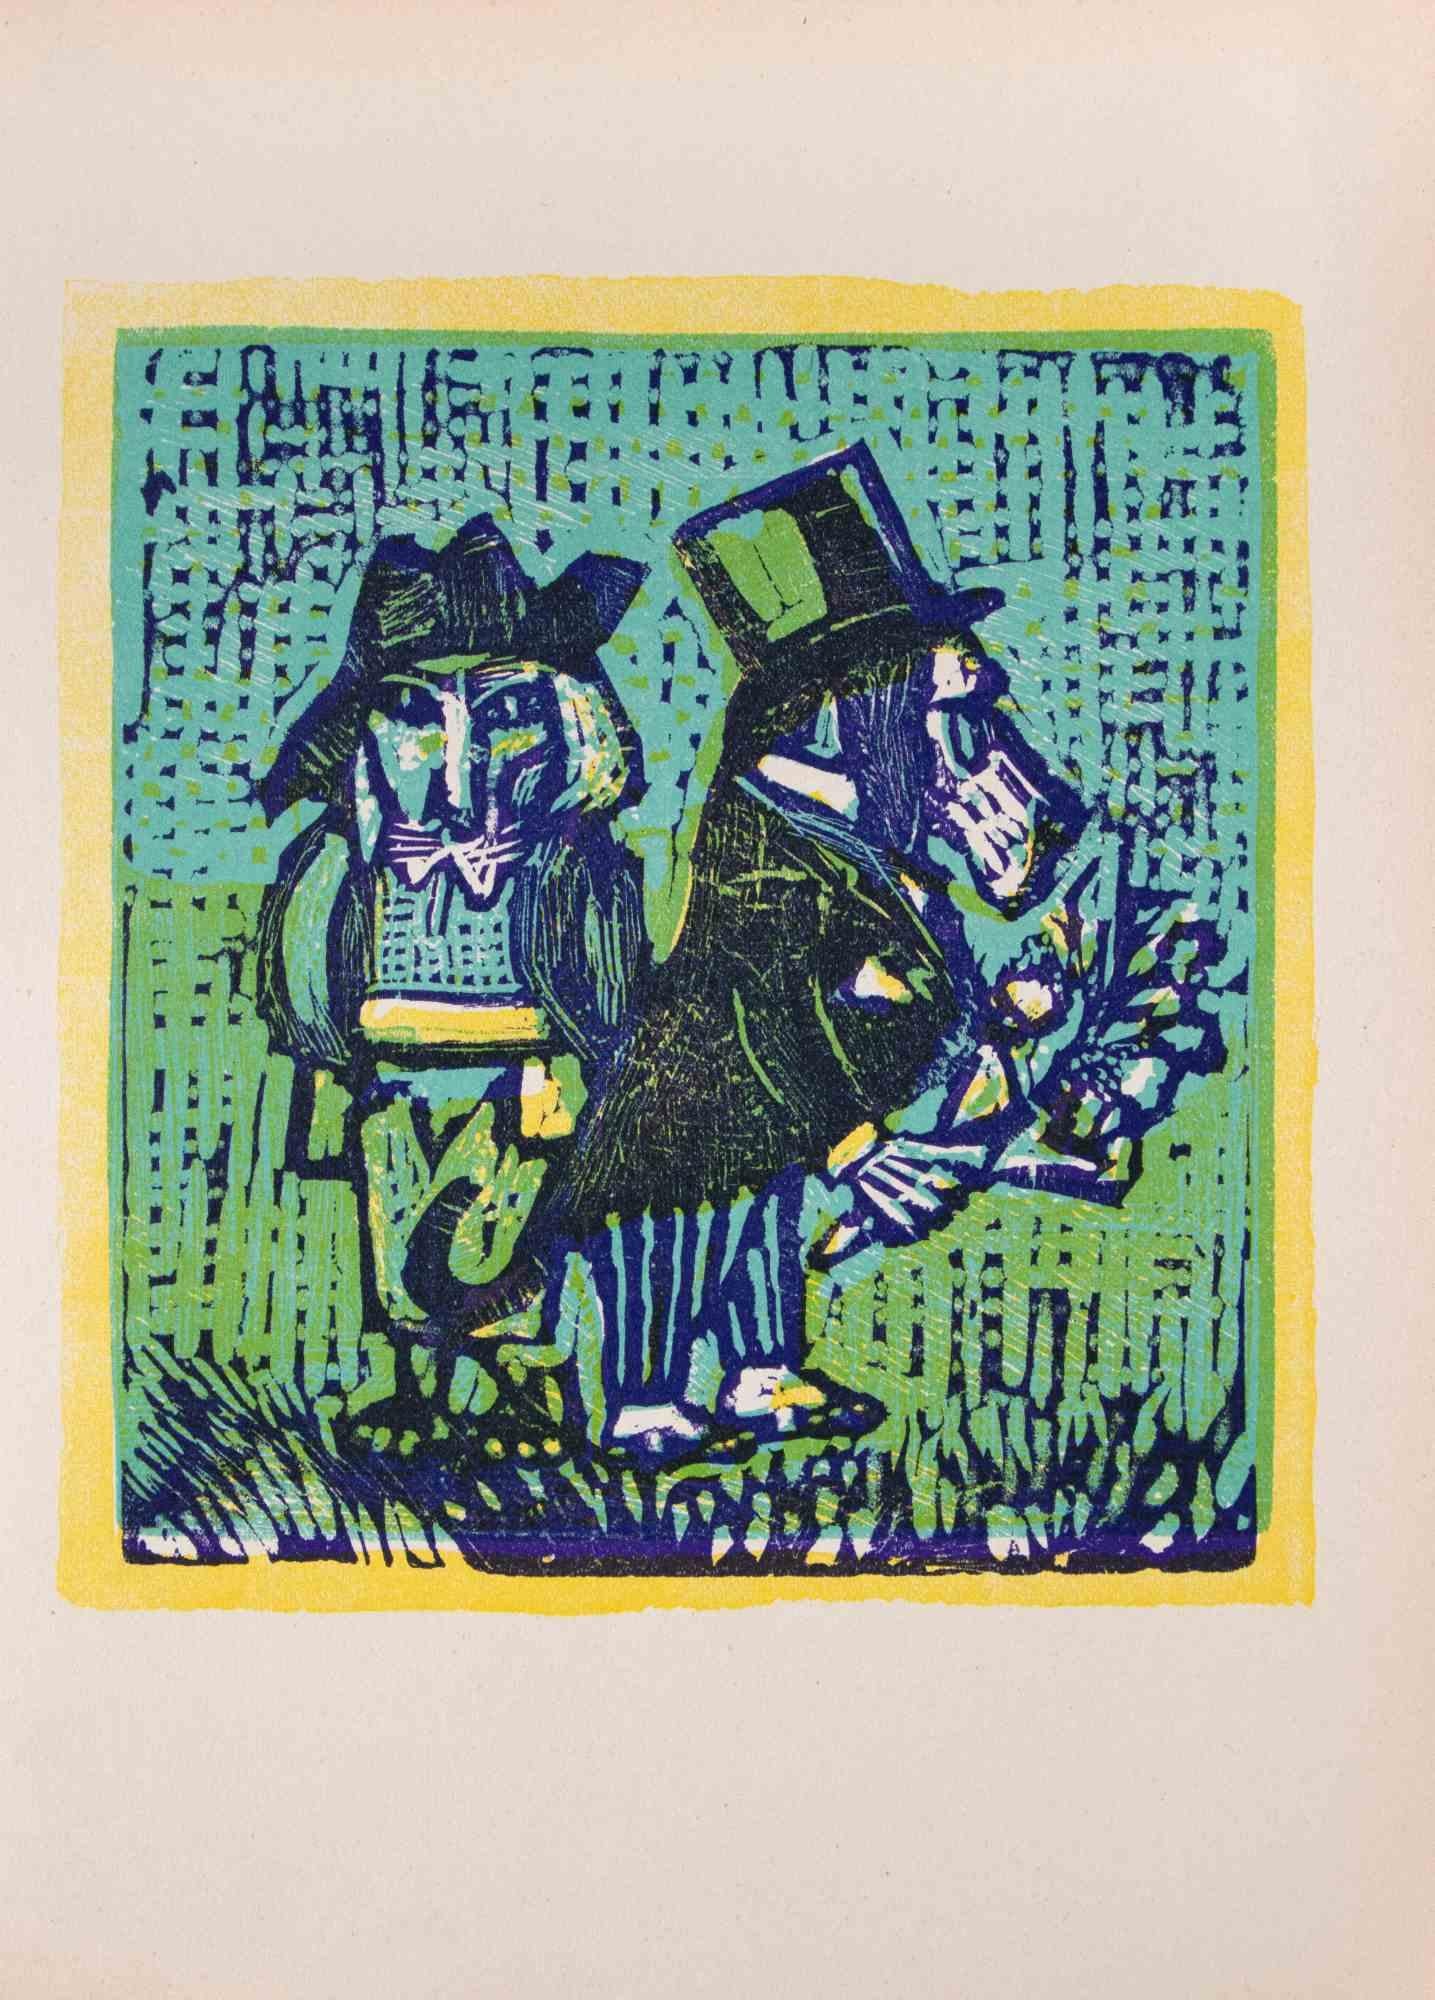 Gentledogs - Original Linocut by Mino Maccari - 1951